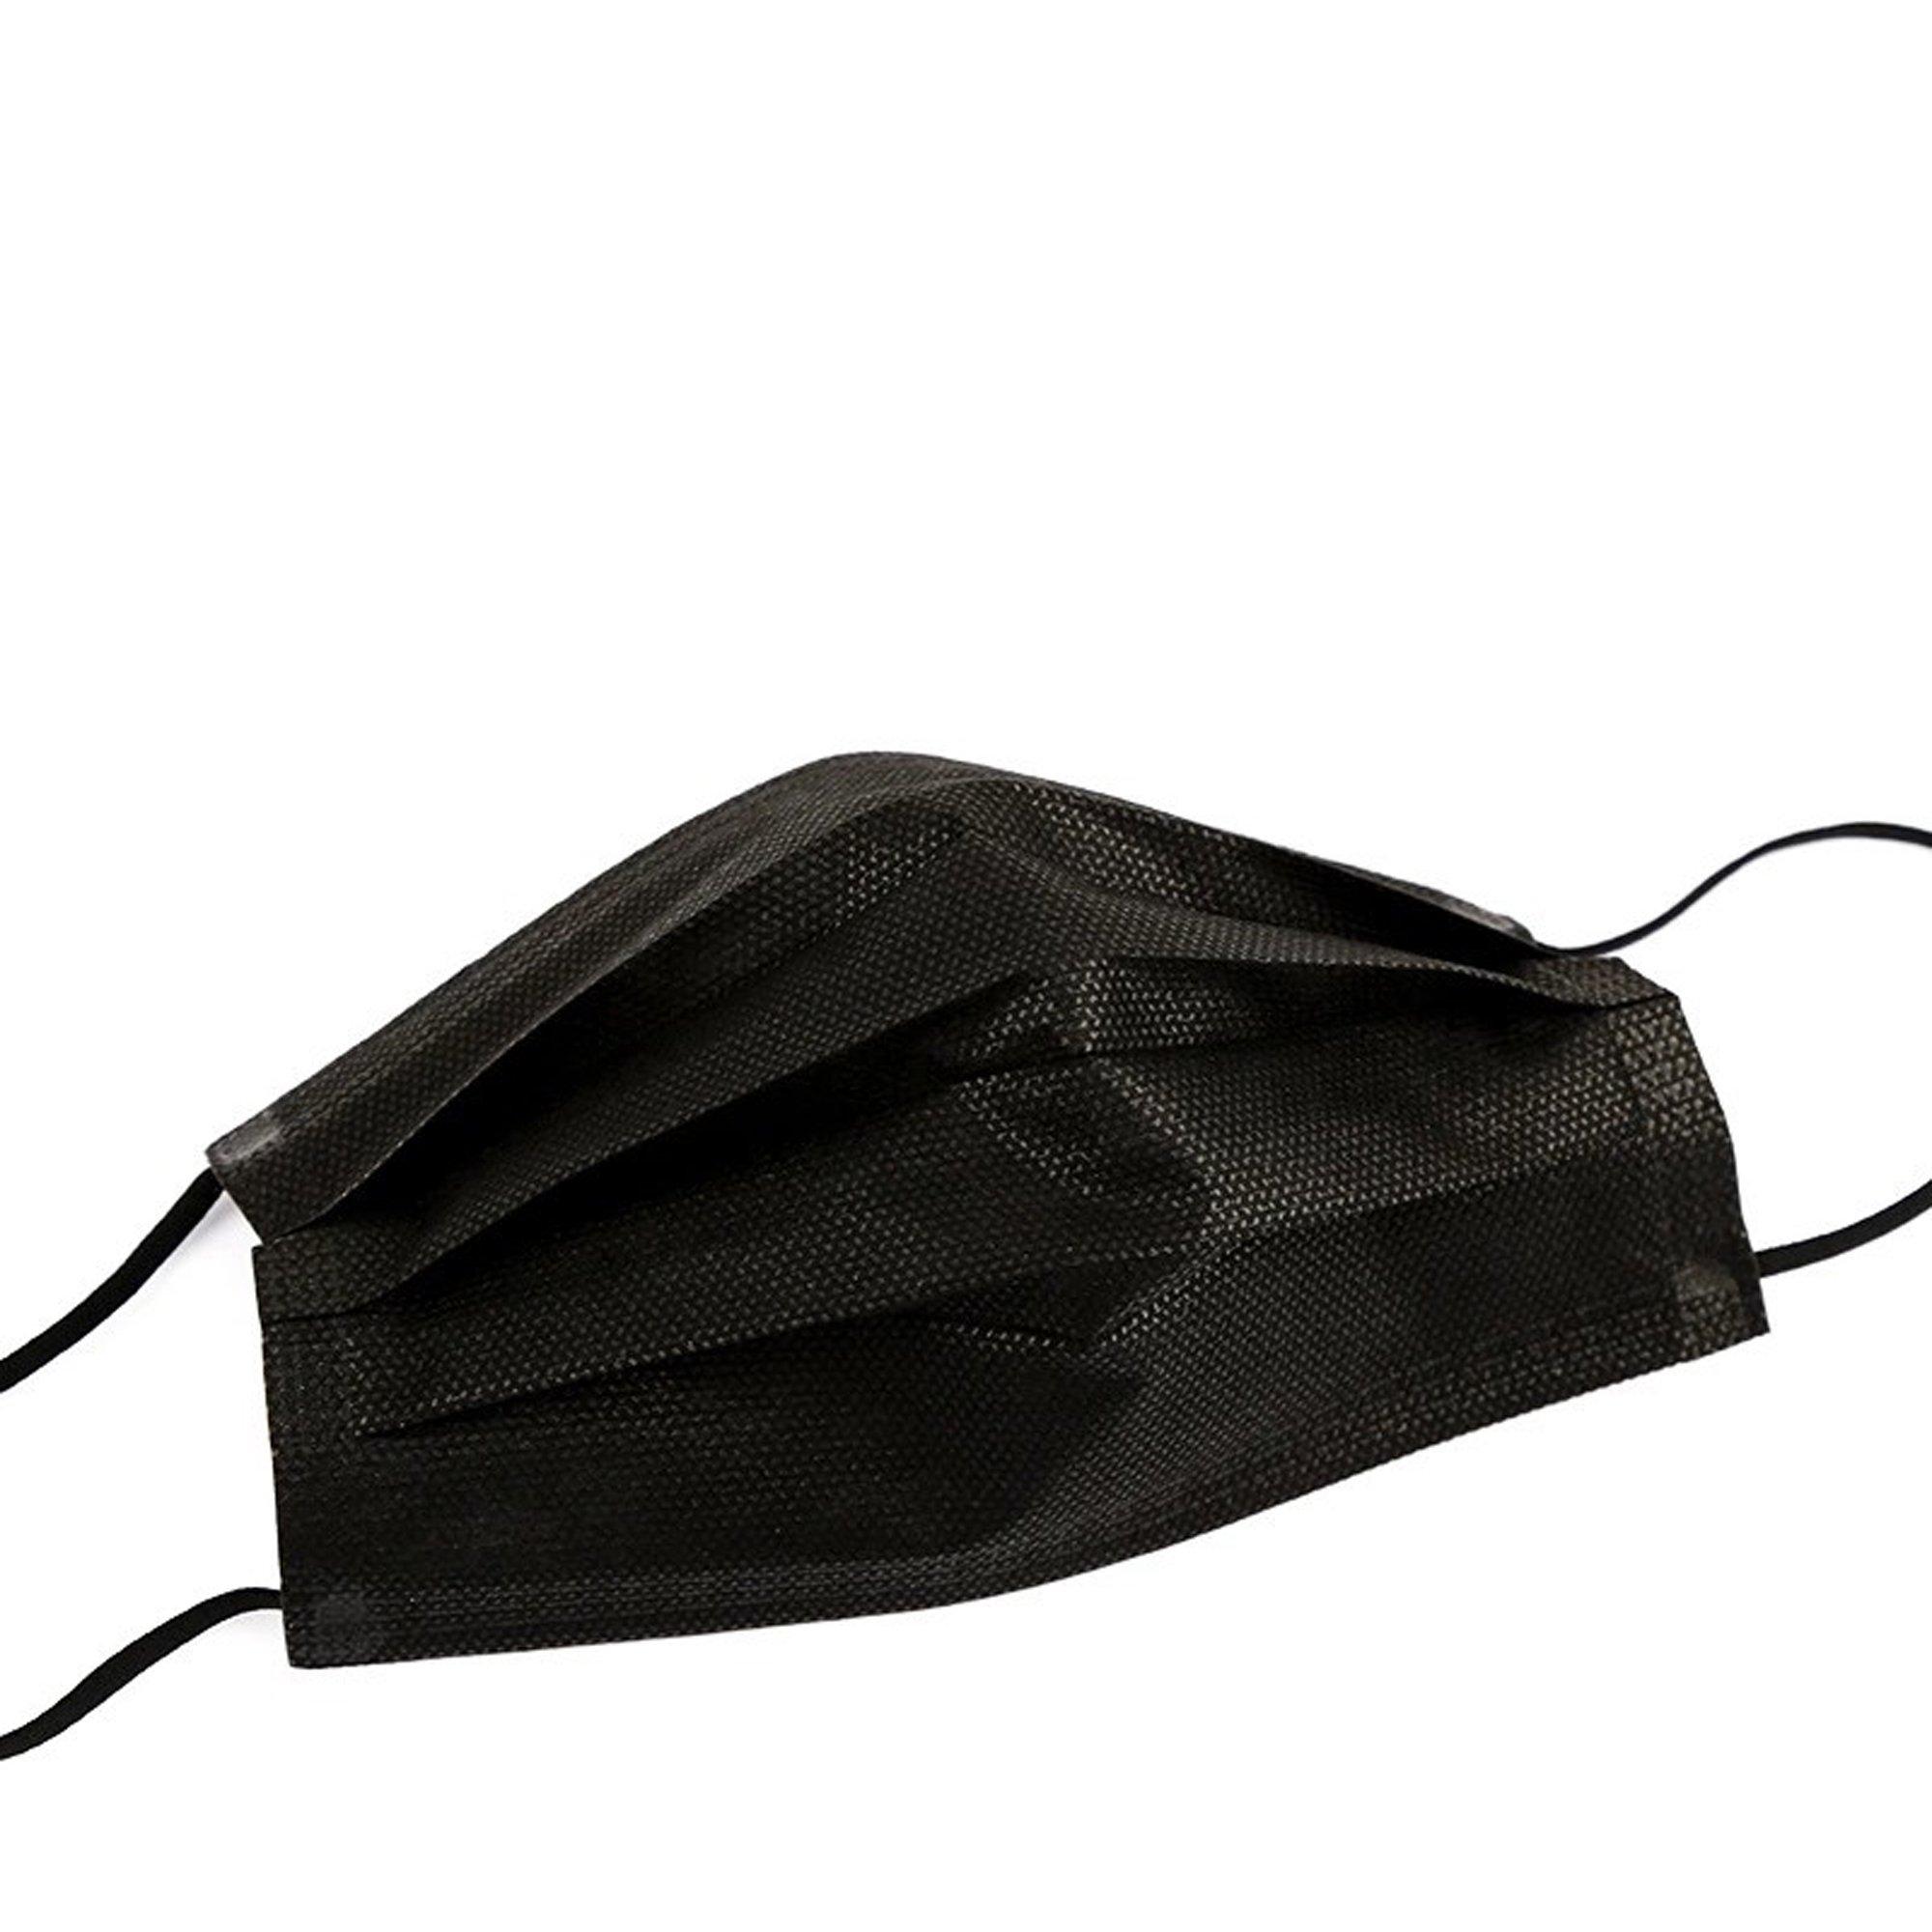 Image of Osiris Black Mask Hygienemaske 3-Lagig, Mundschutzmasken, 50 Stück - 50 Stück